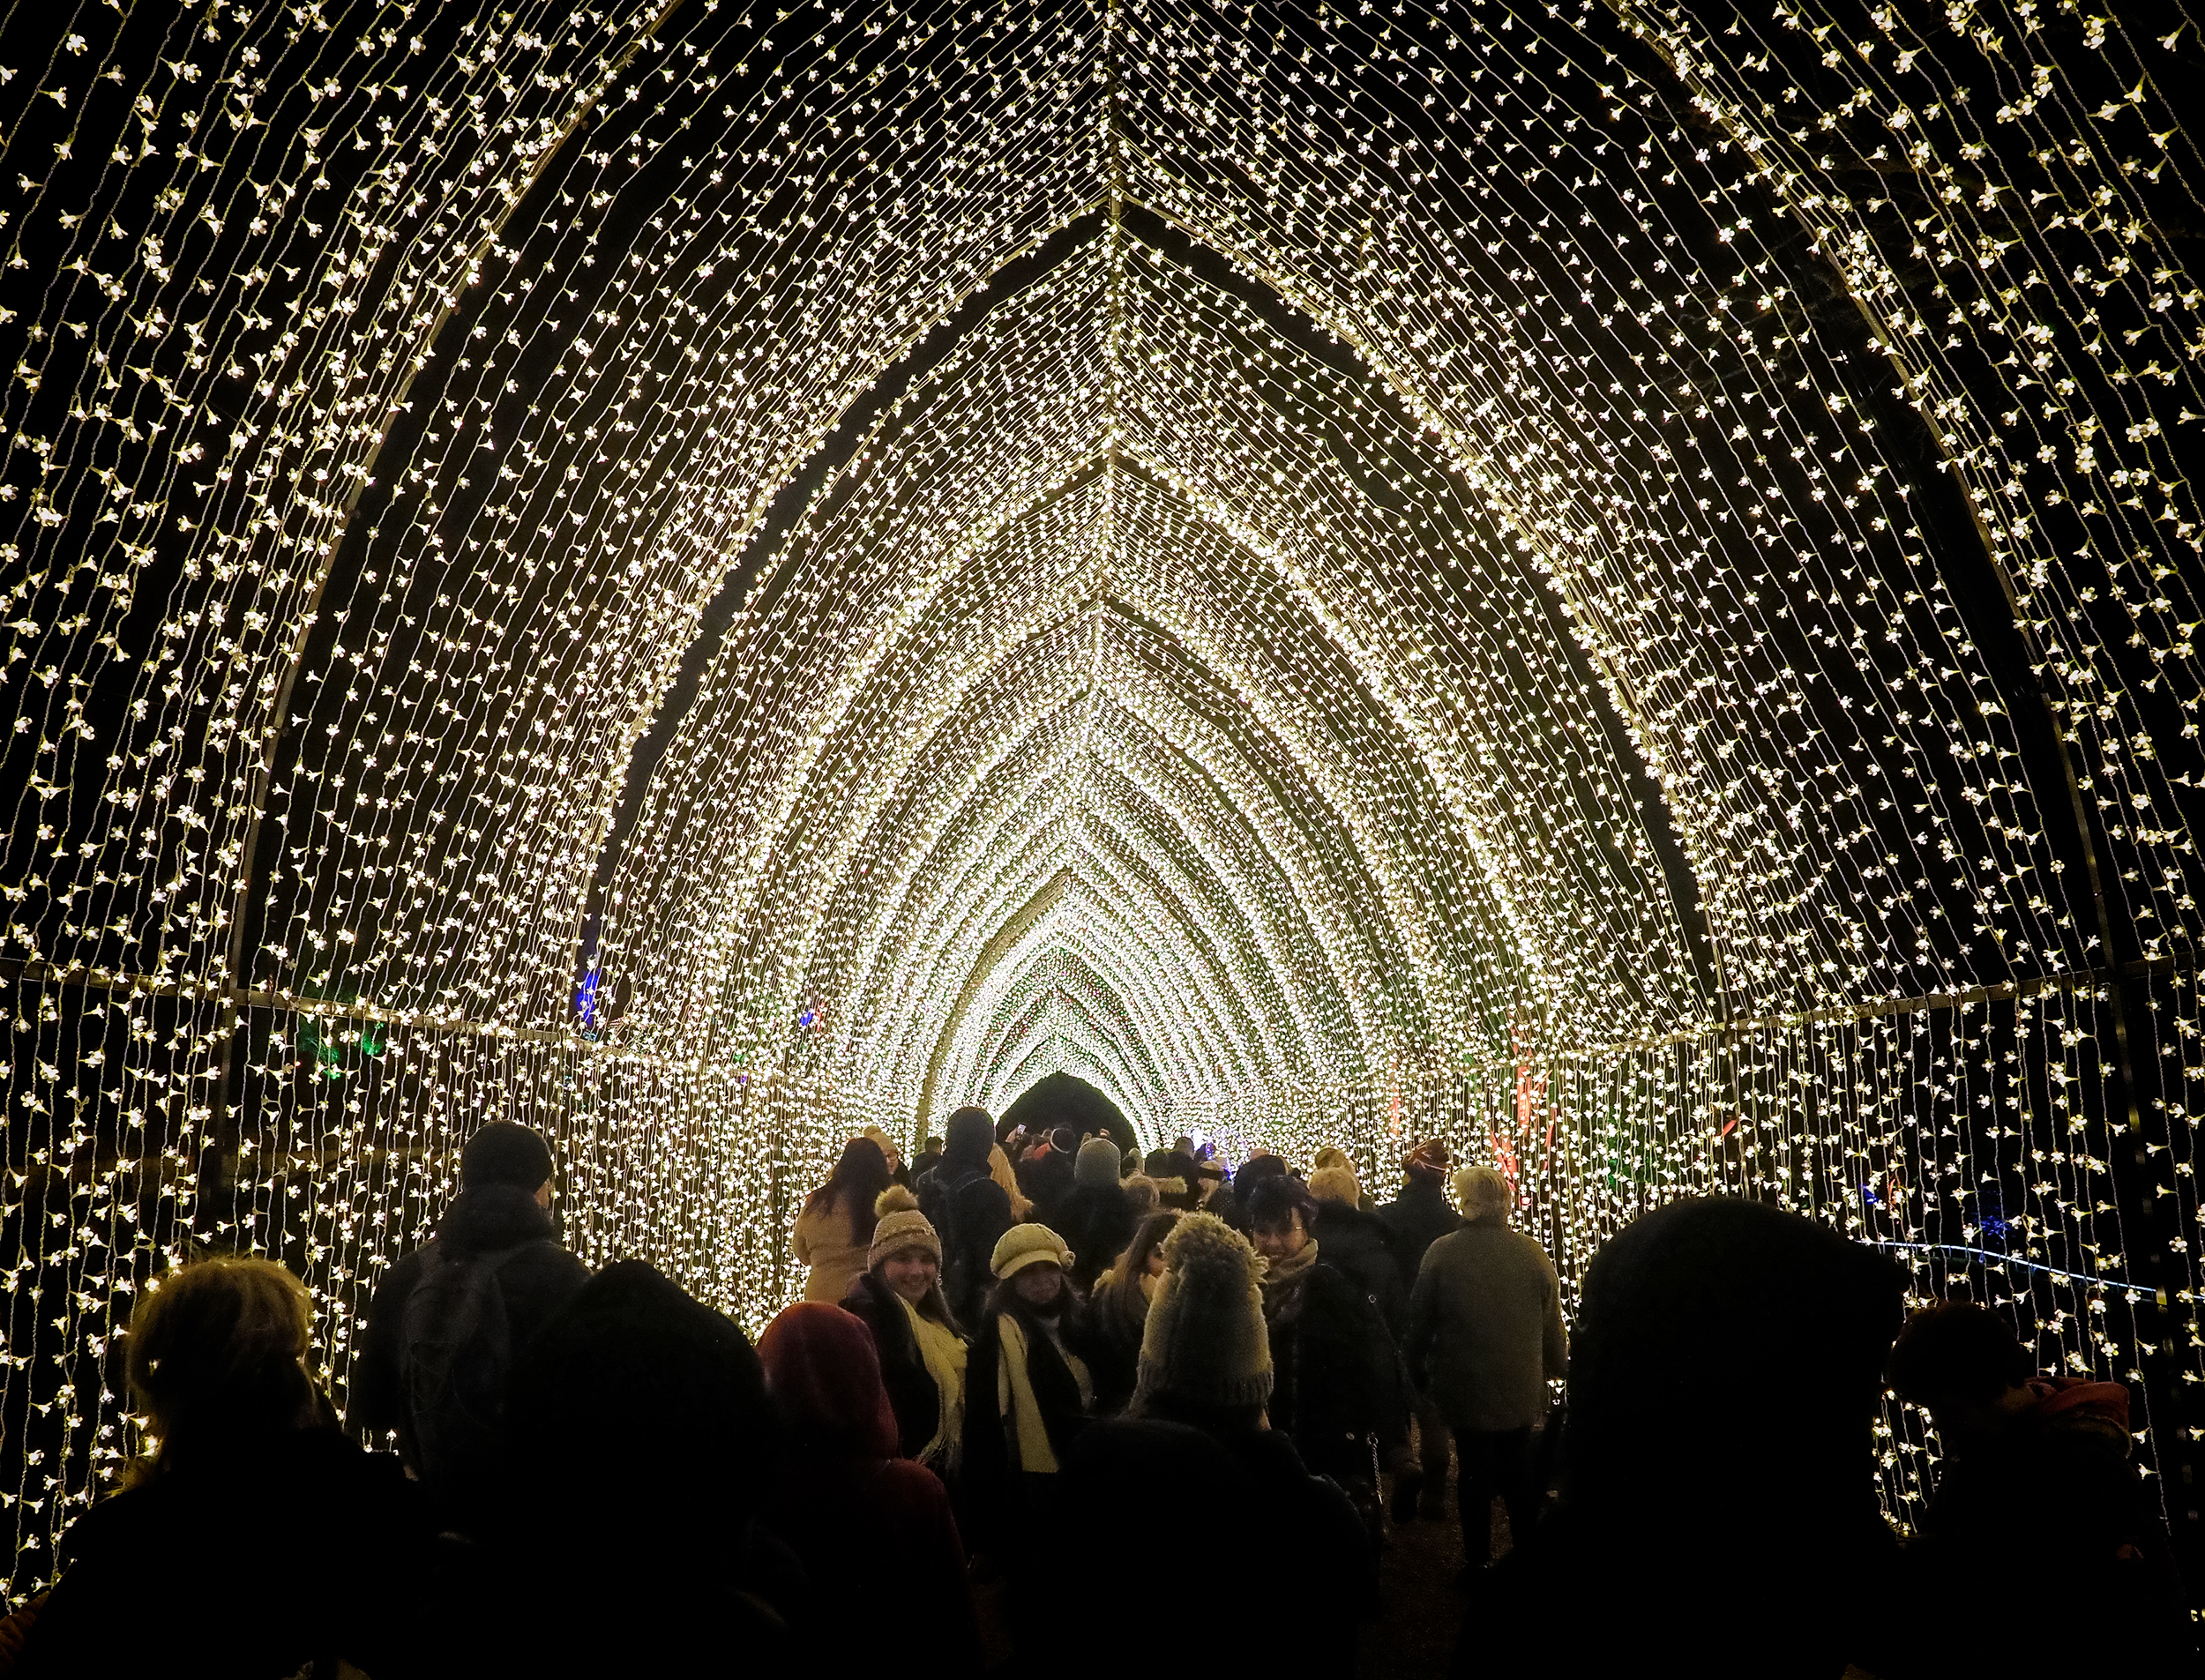 Tunnel of Lights